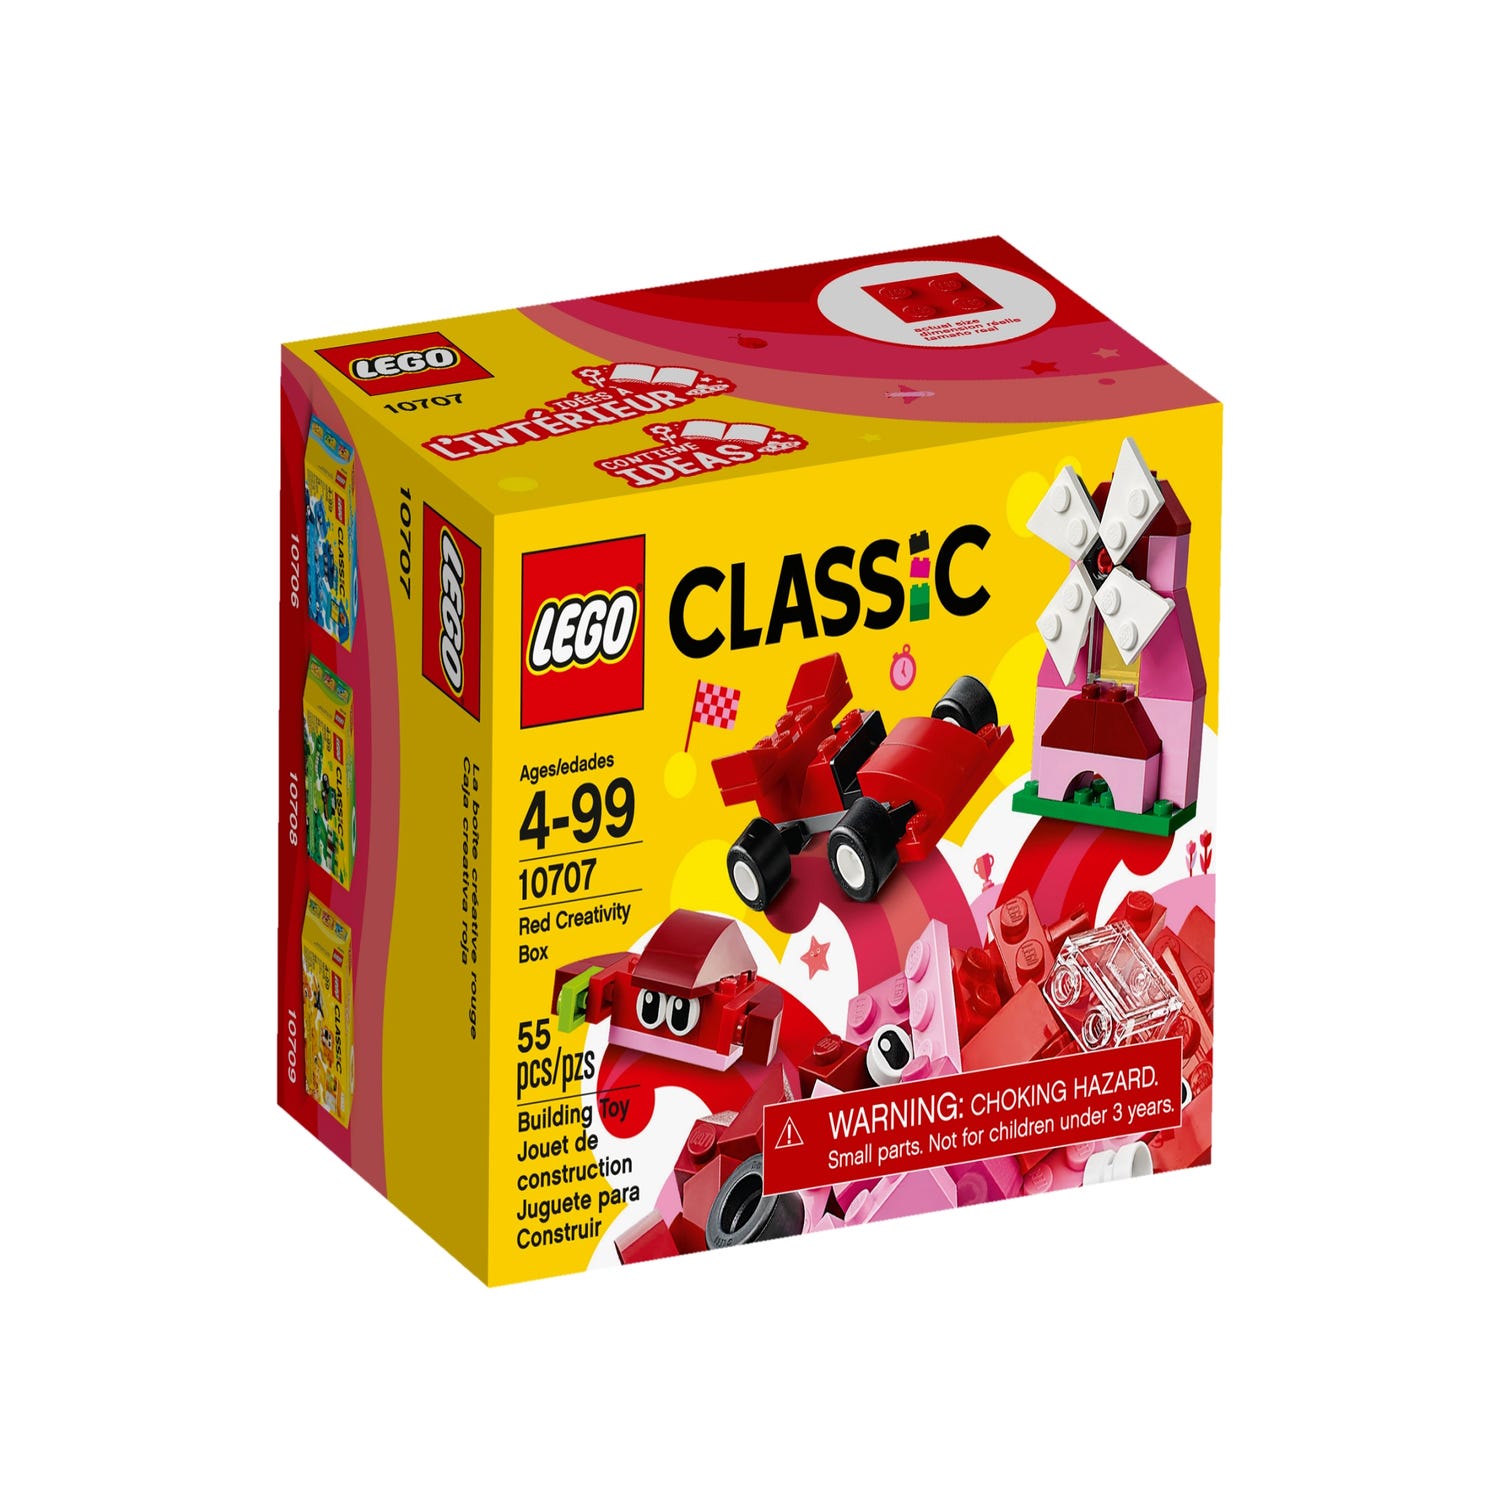 prins Eekhoorn Oeganda Red Creativity Box 10707 | Classic | Buy online at the Official LEGO® Shop  US